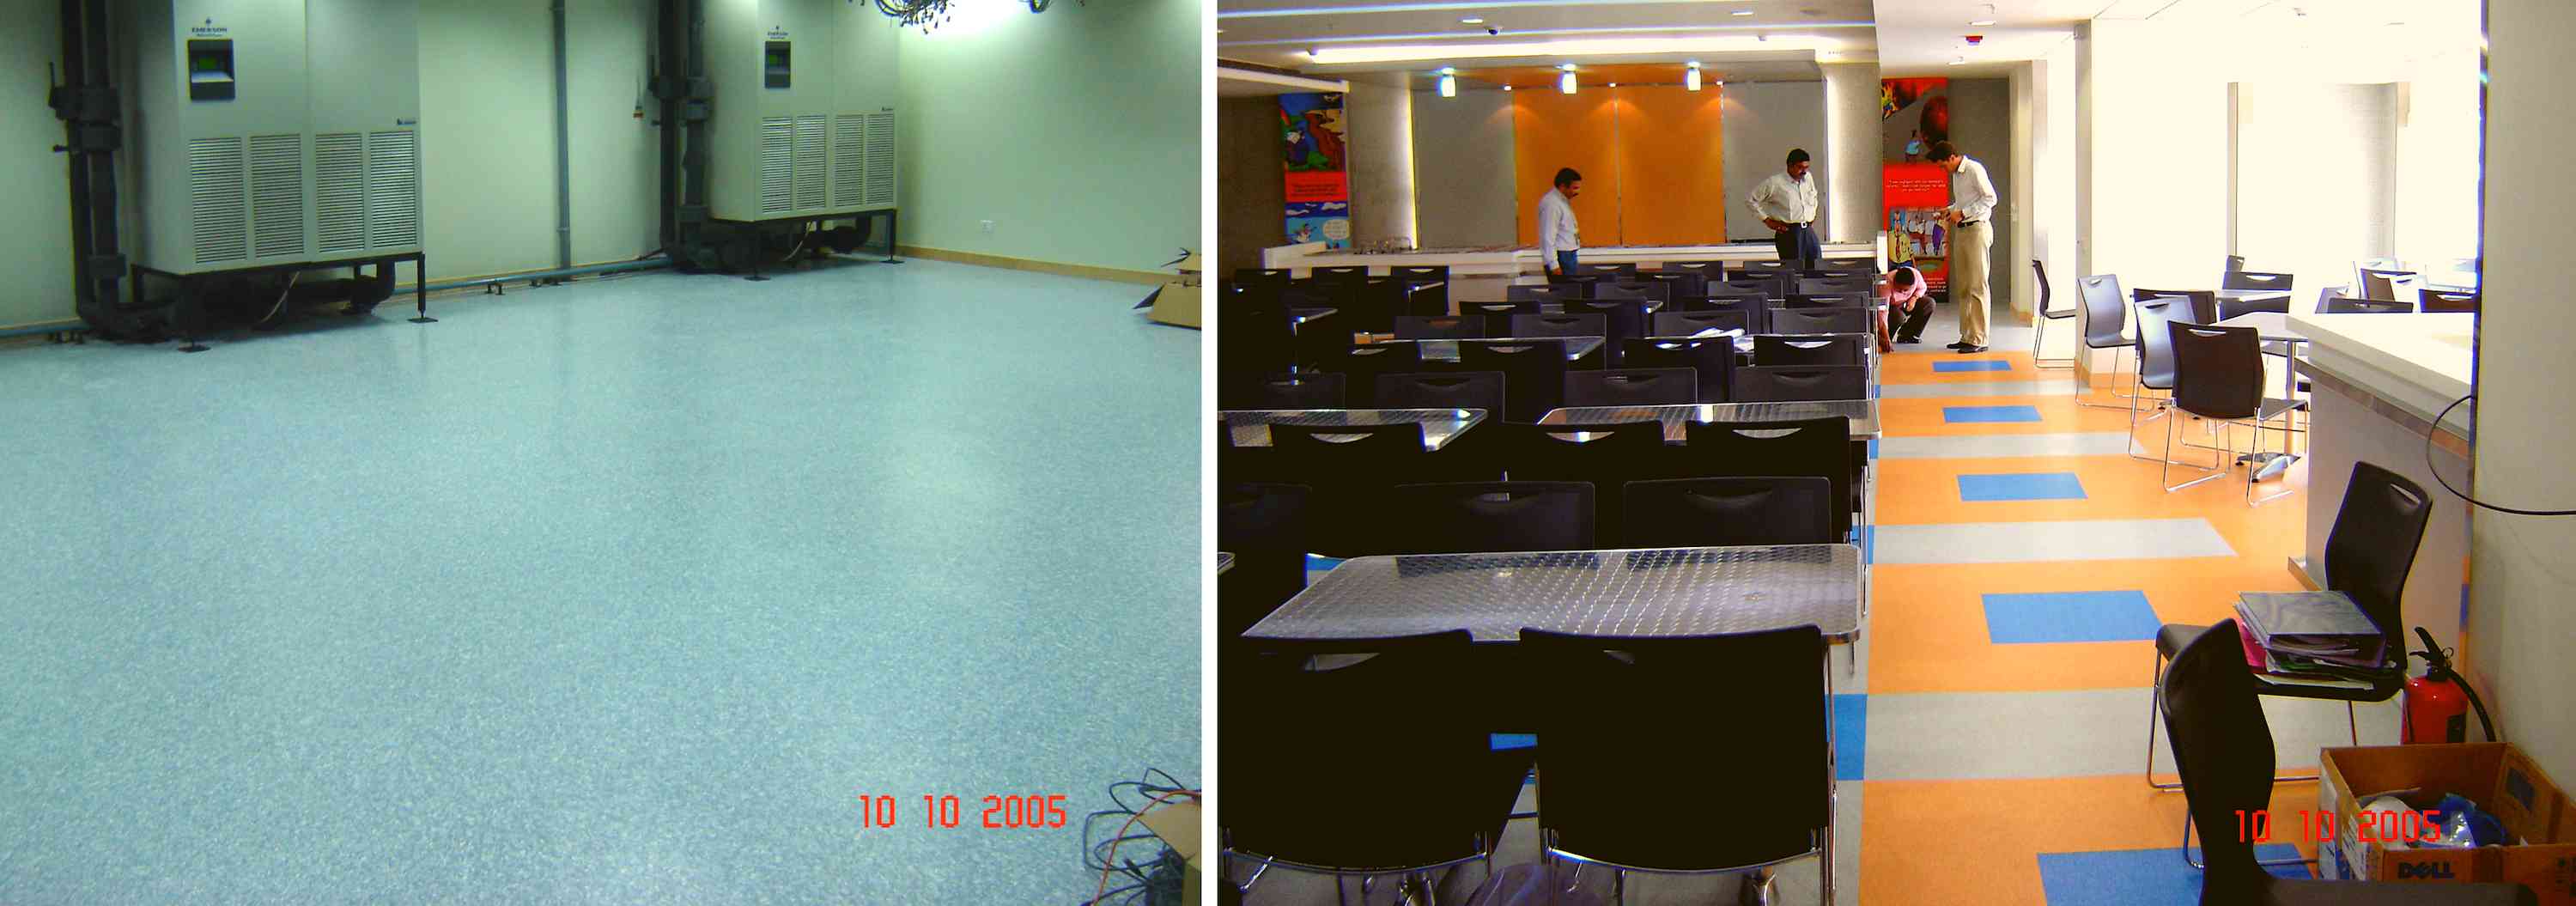 vinyl flooring bangalore, Juniper Networks office flooring in bangalore 